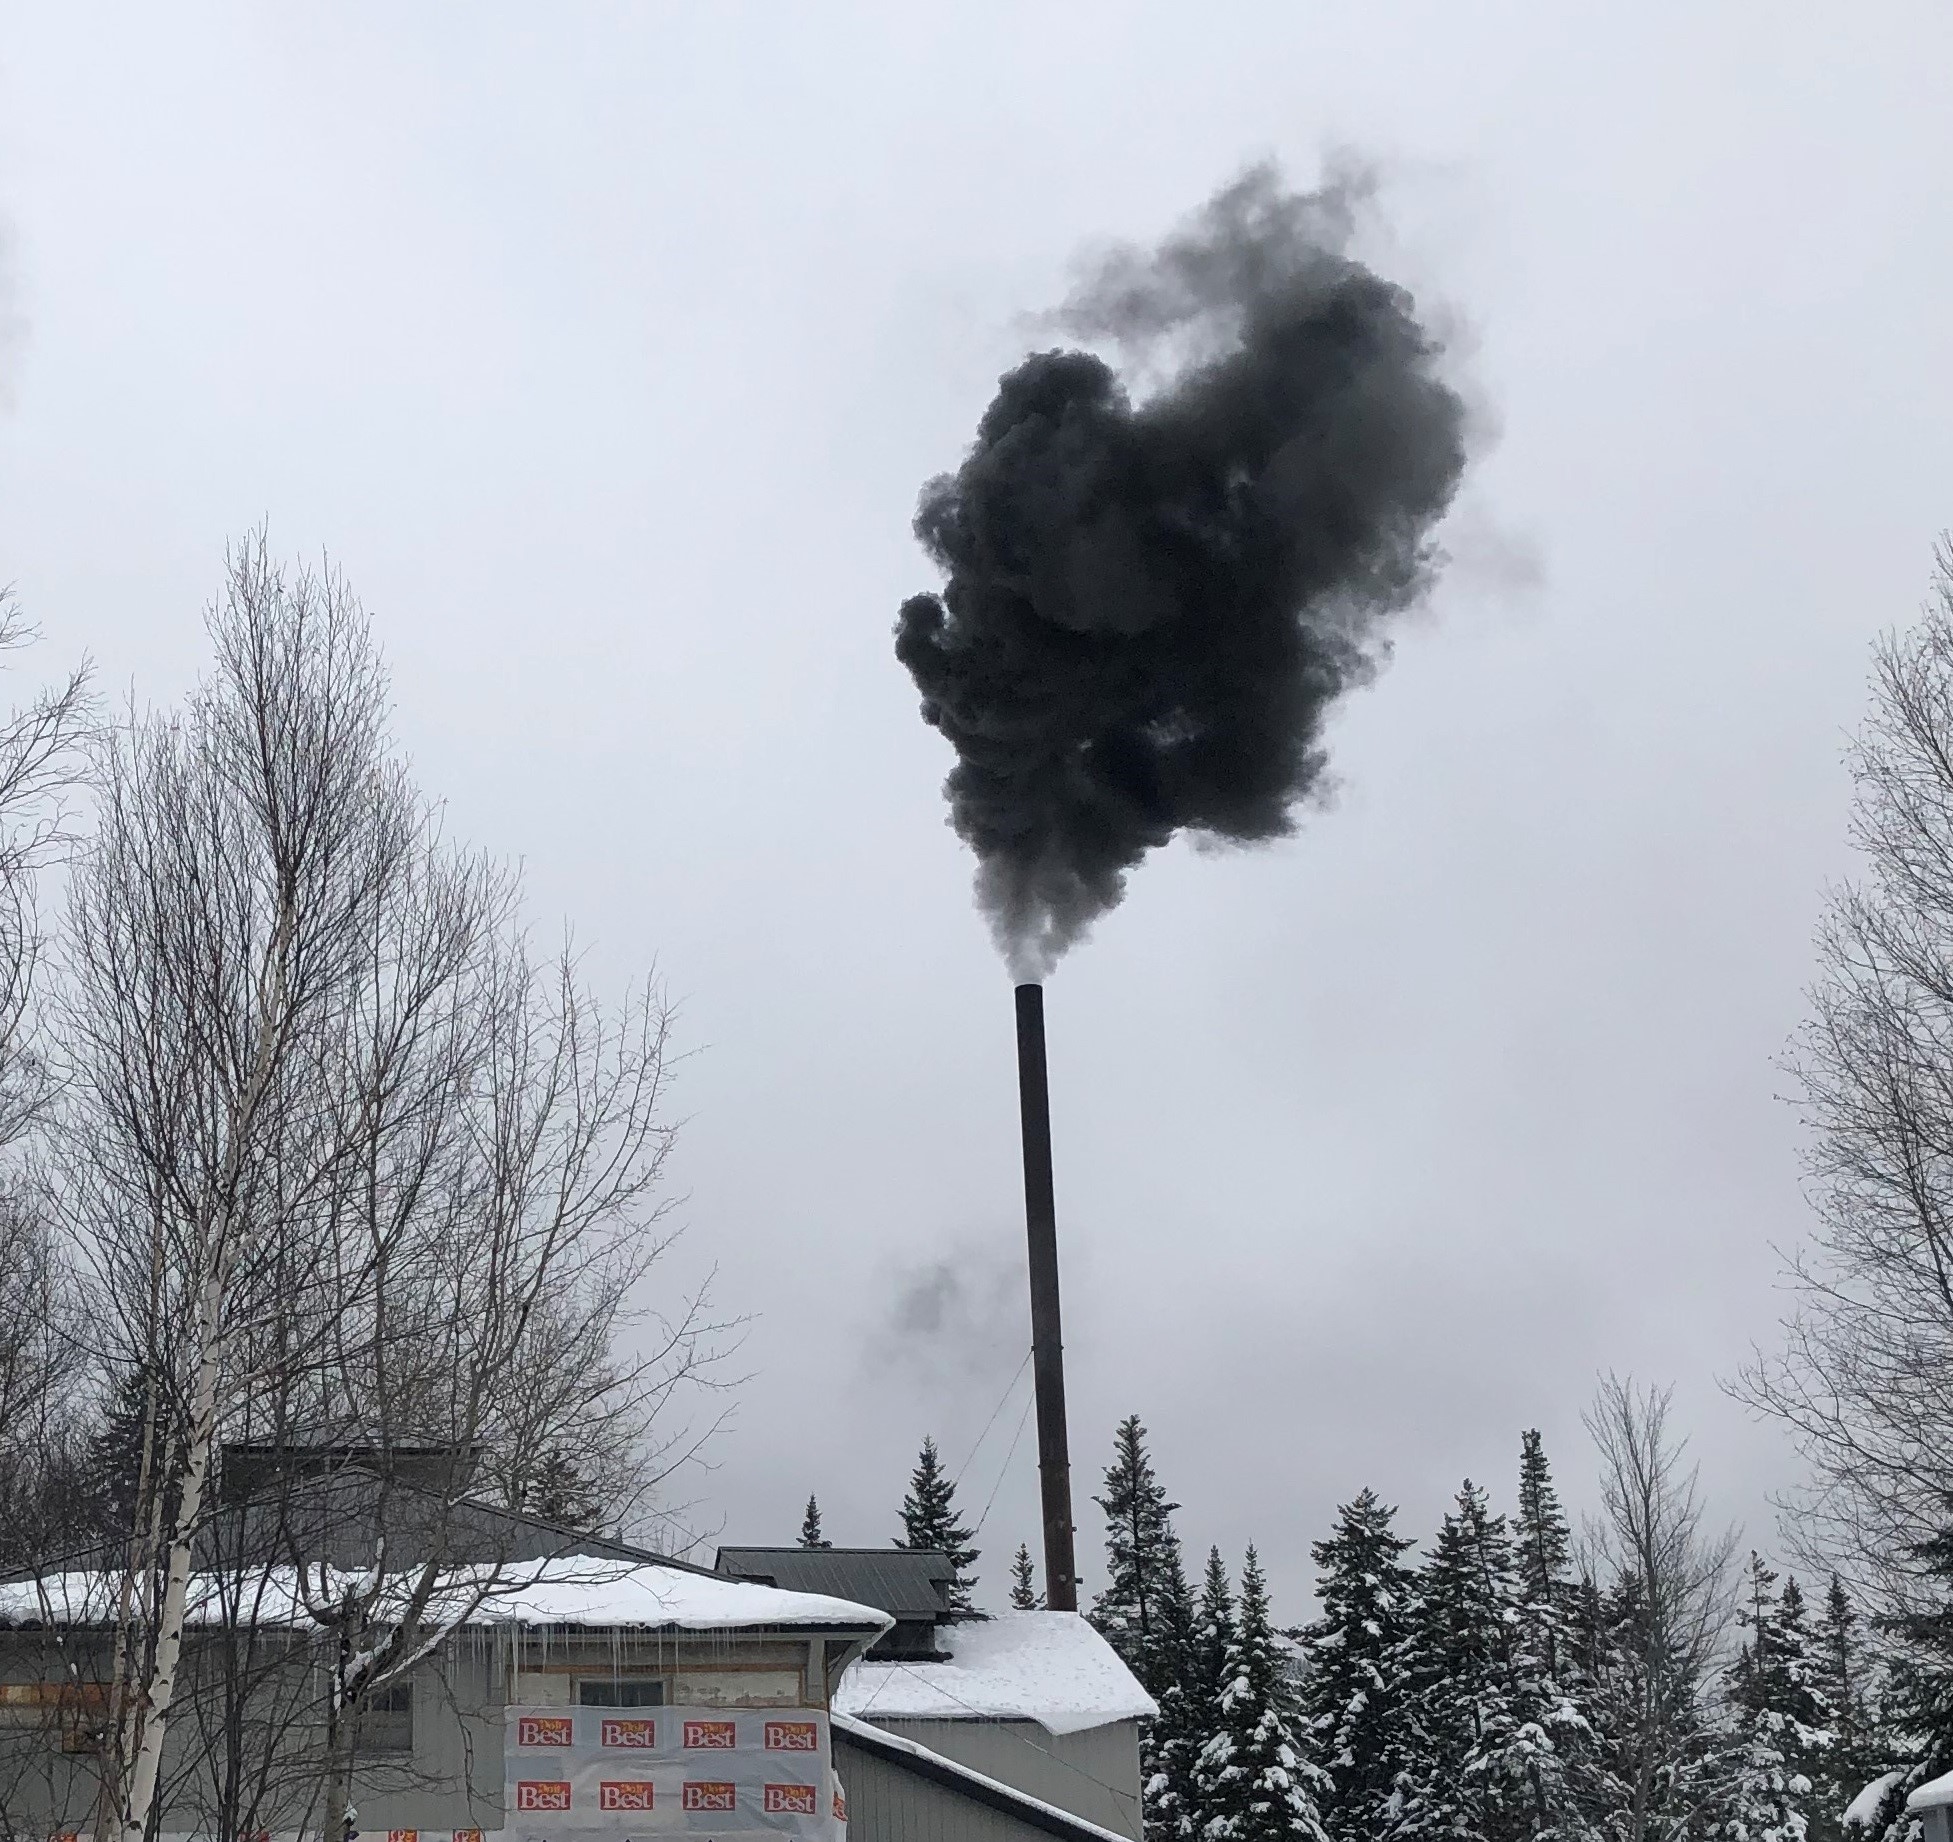 Black Smoke Plume from Malfunctioning Boiler   